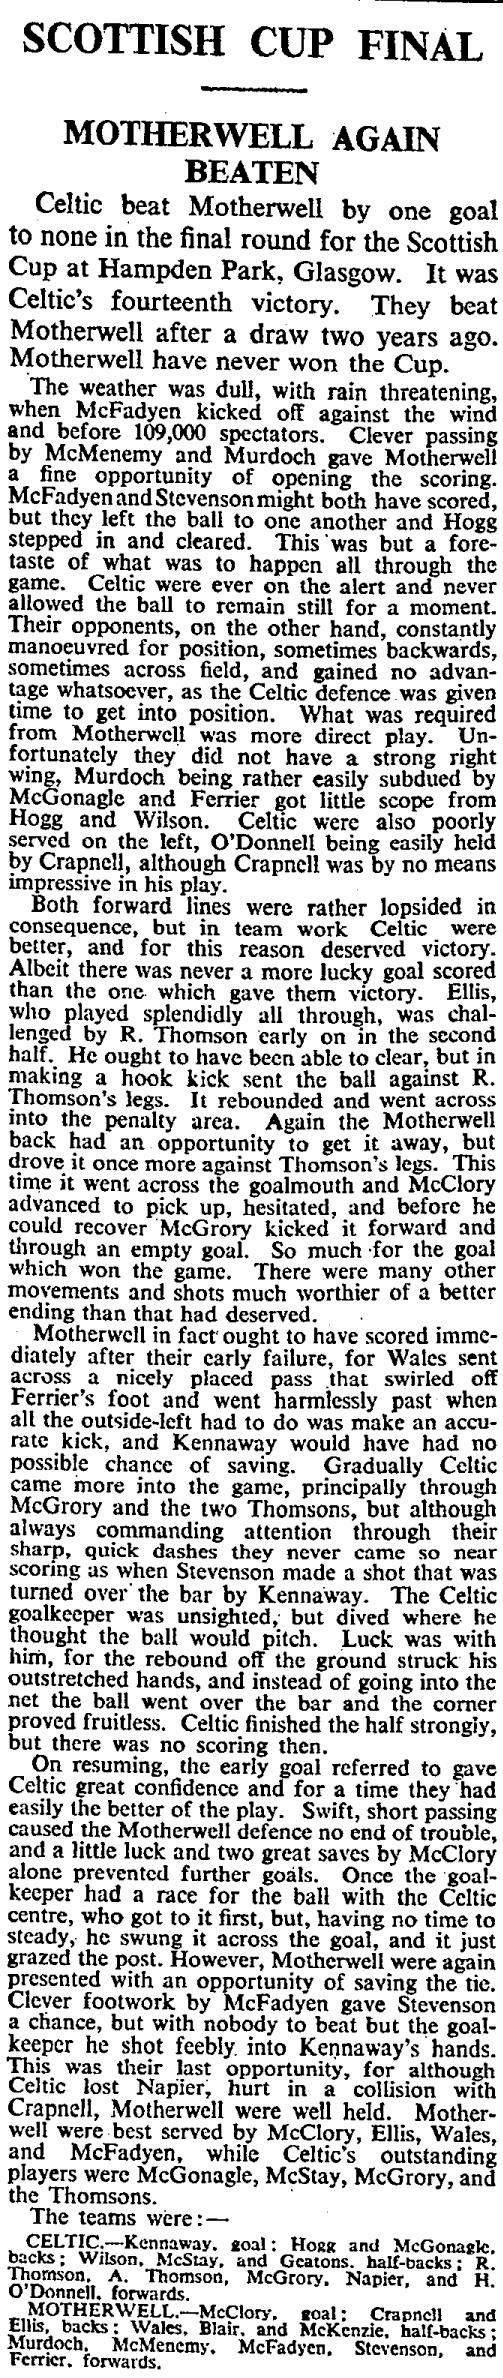 1933 Scottish Cup Final - Newspaper Report